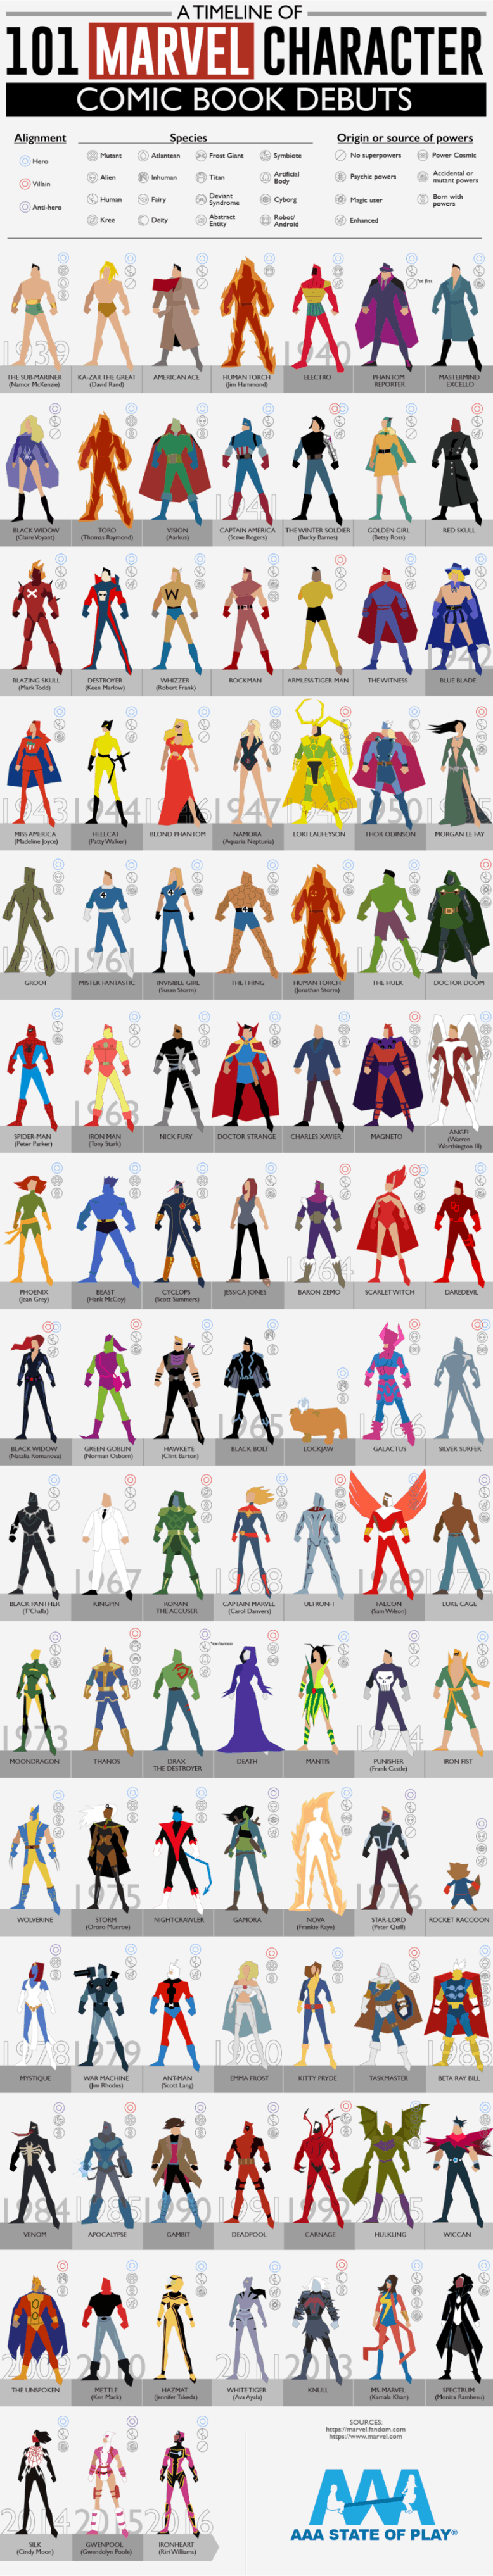 101 Marvel Character Comic Book Debuts